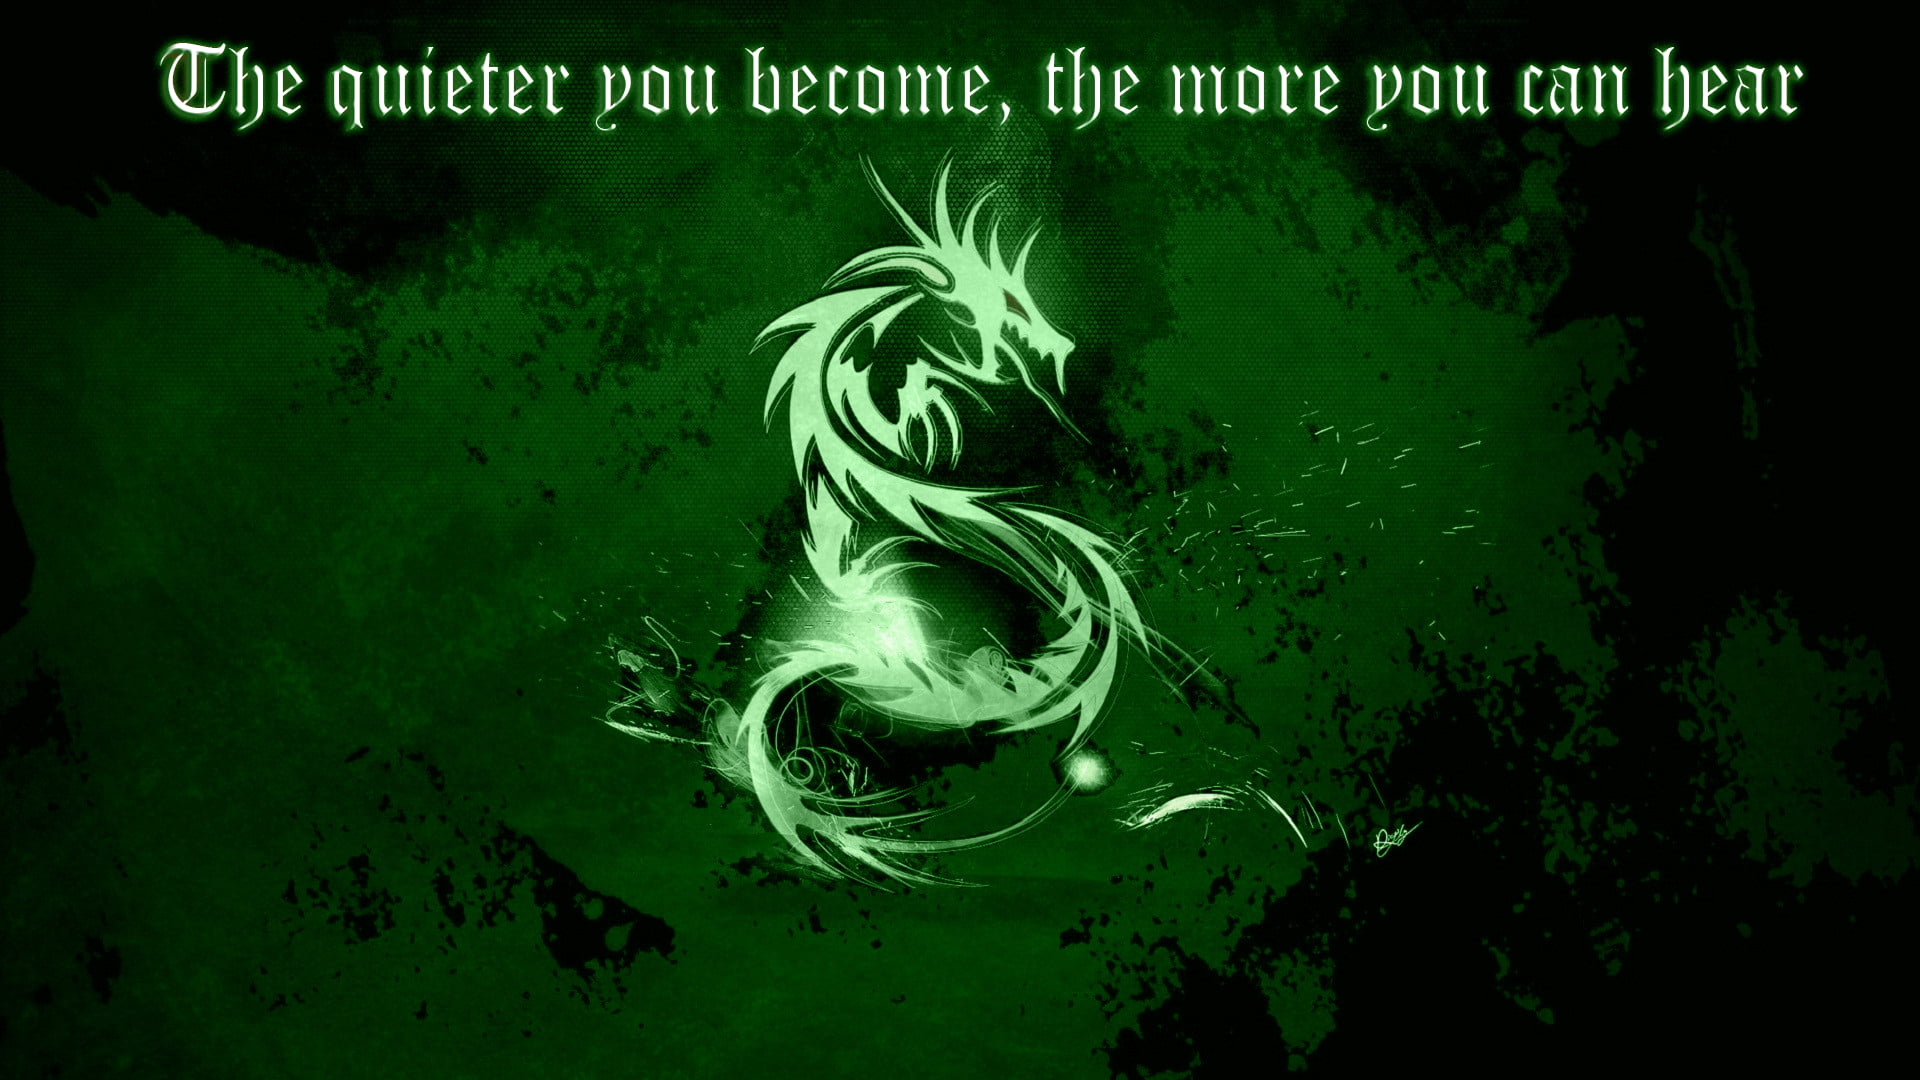 green and white dragon illustration, dragon, quote